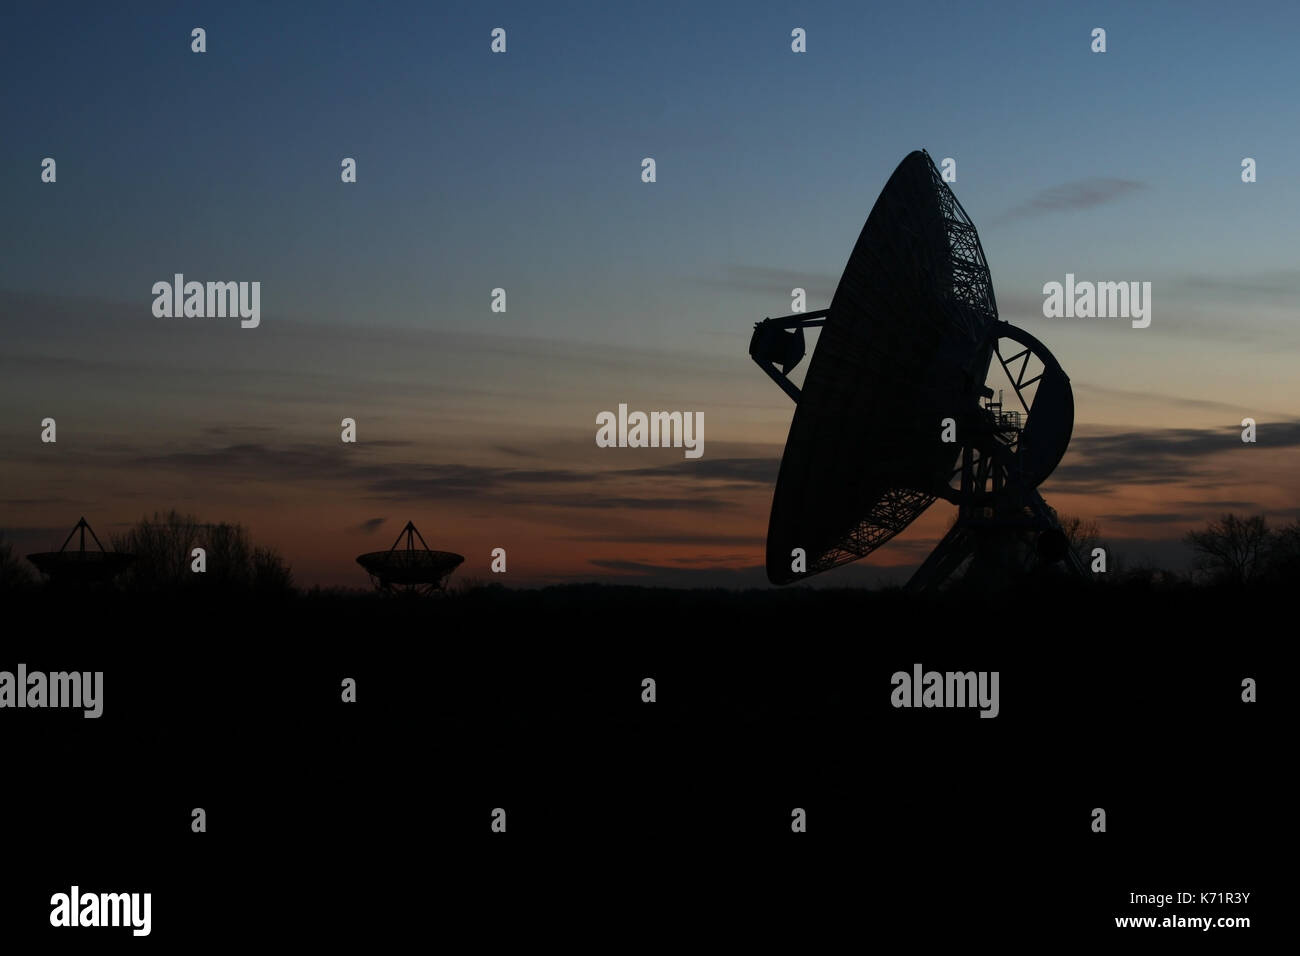 Radio Telescope Cambridge High Resolution Stock Photography and Images -  Alamy